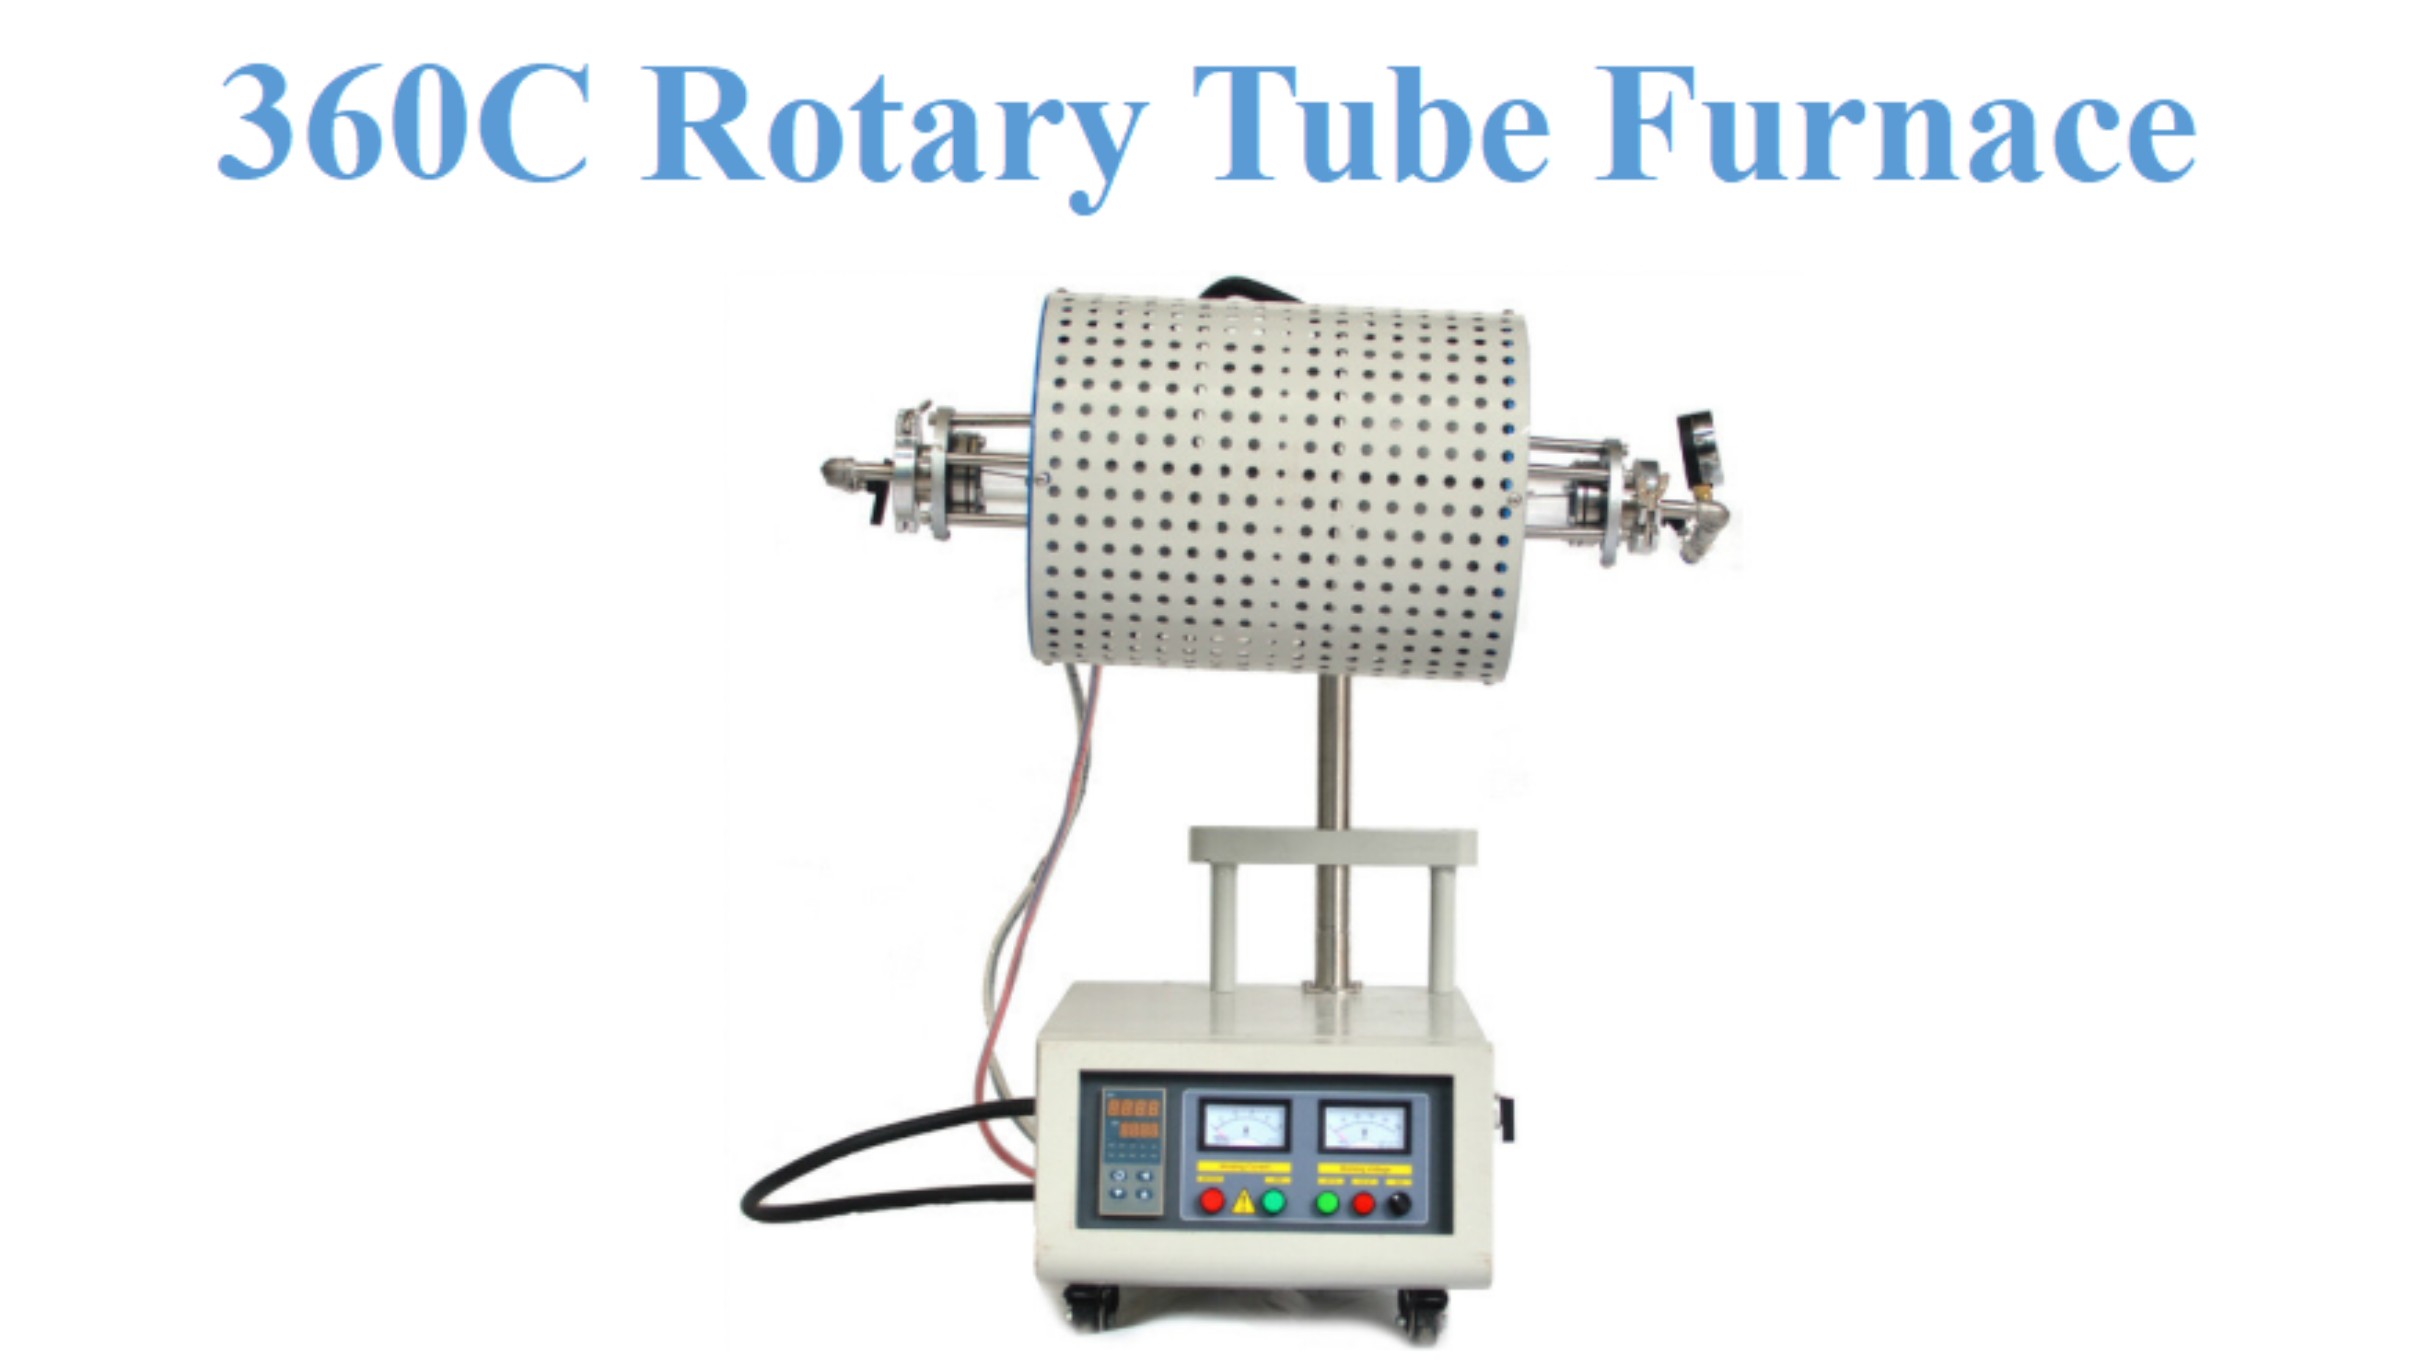 360C Rotary Tube Furnace